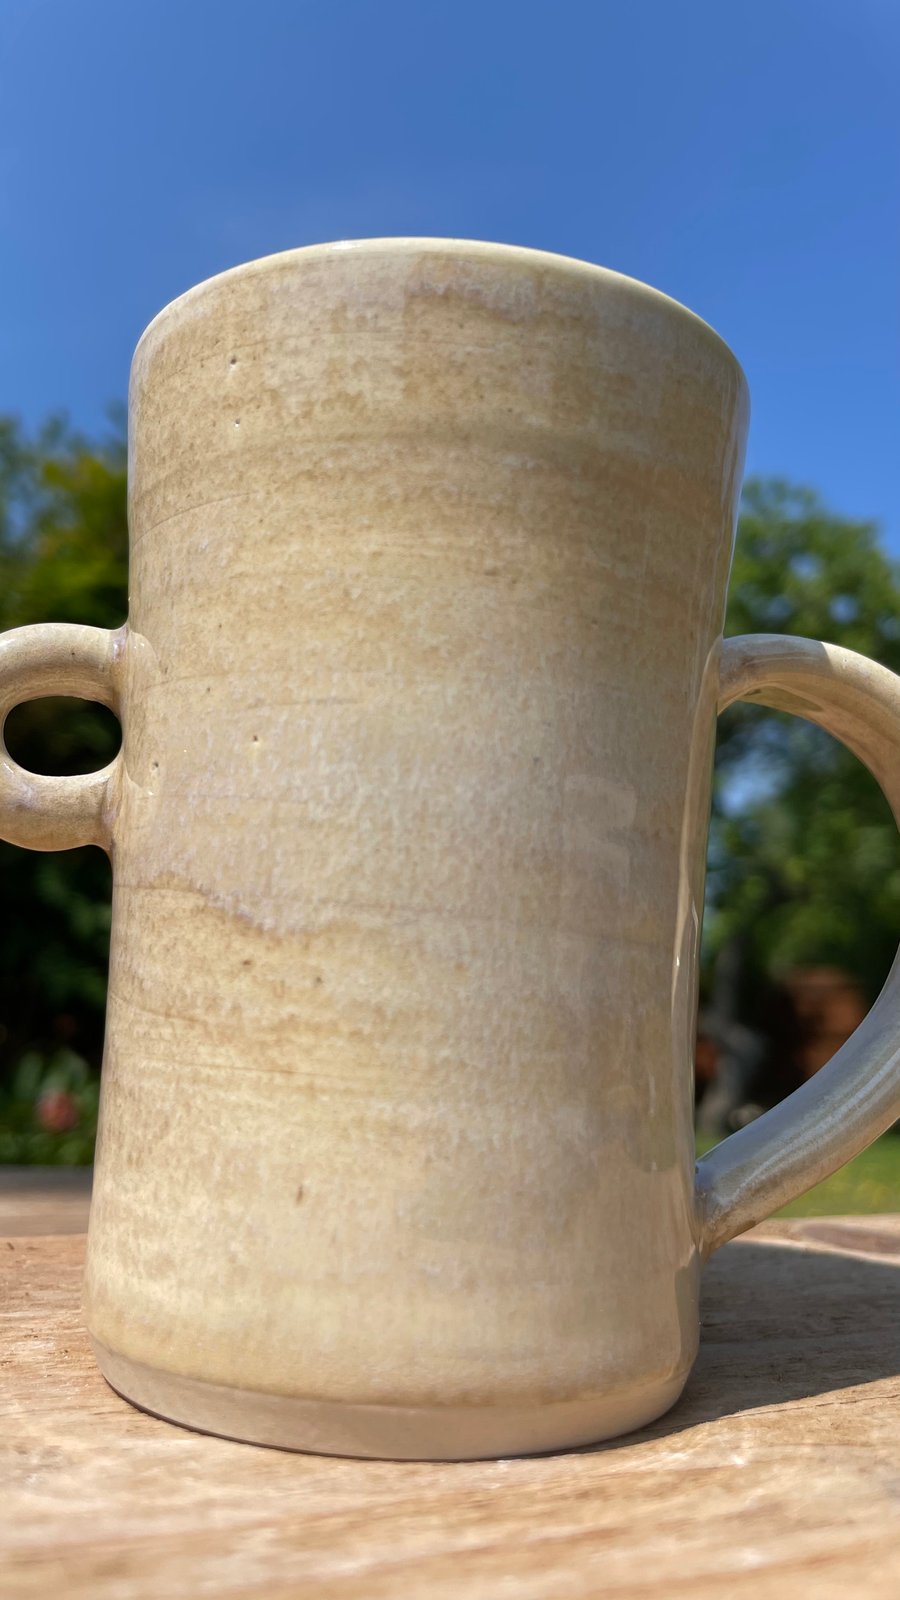 MadeWithMud DigniTEA Mug with side loop support